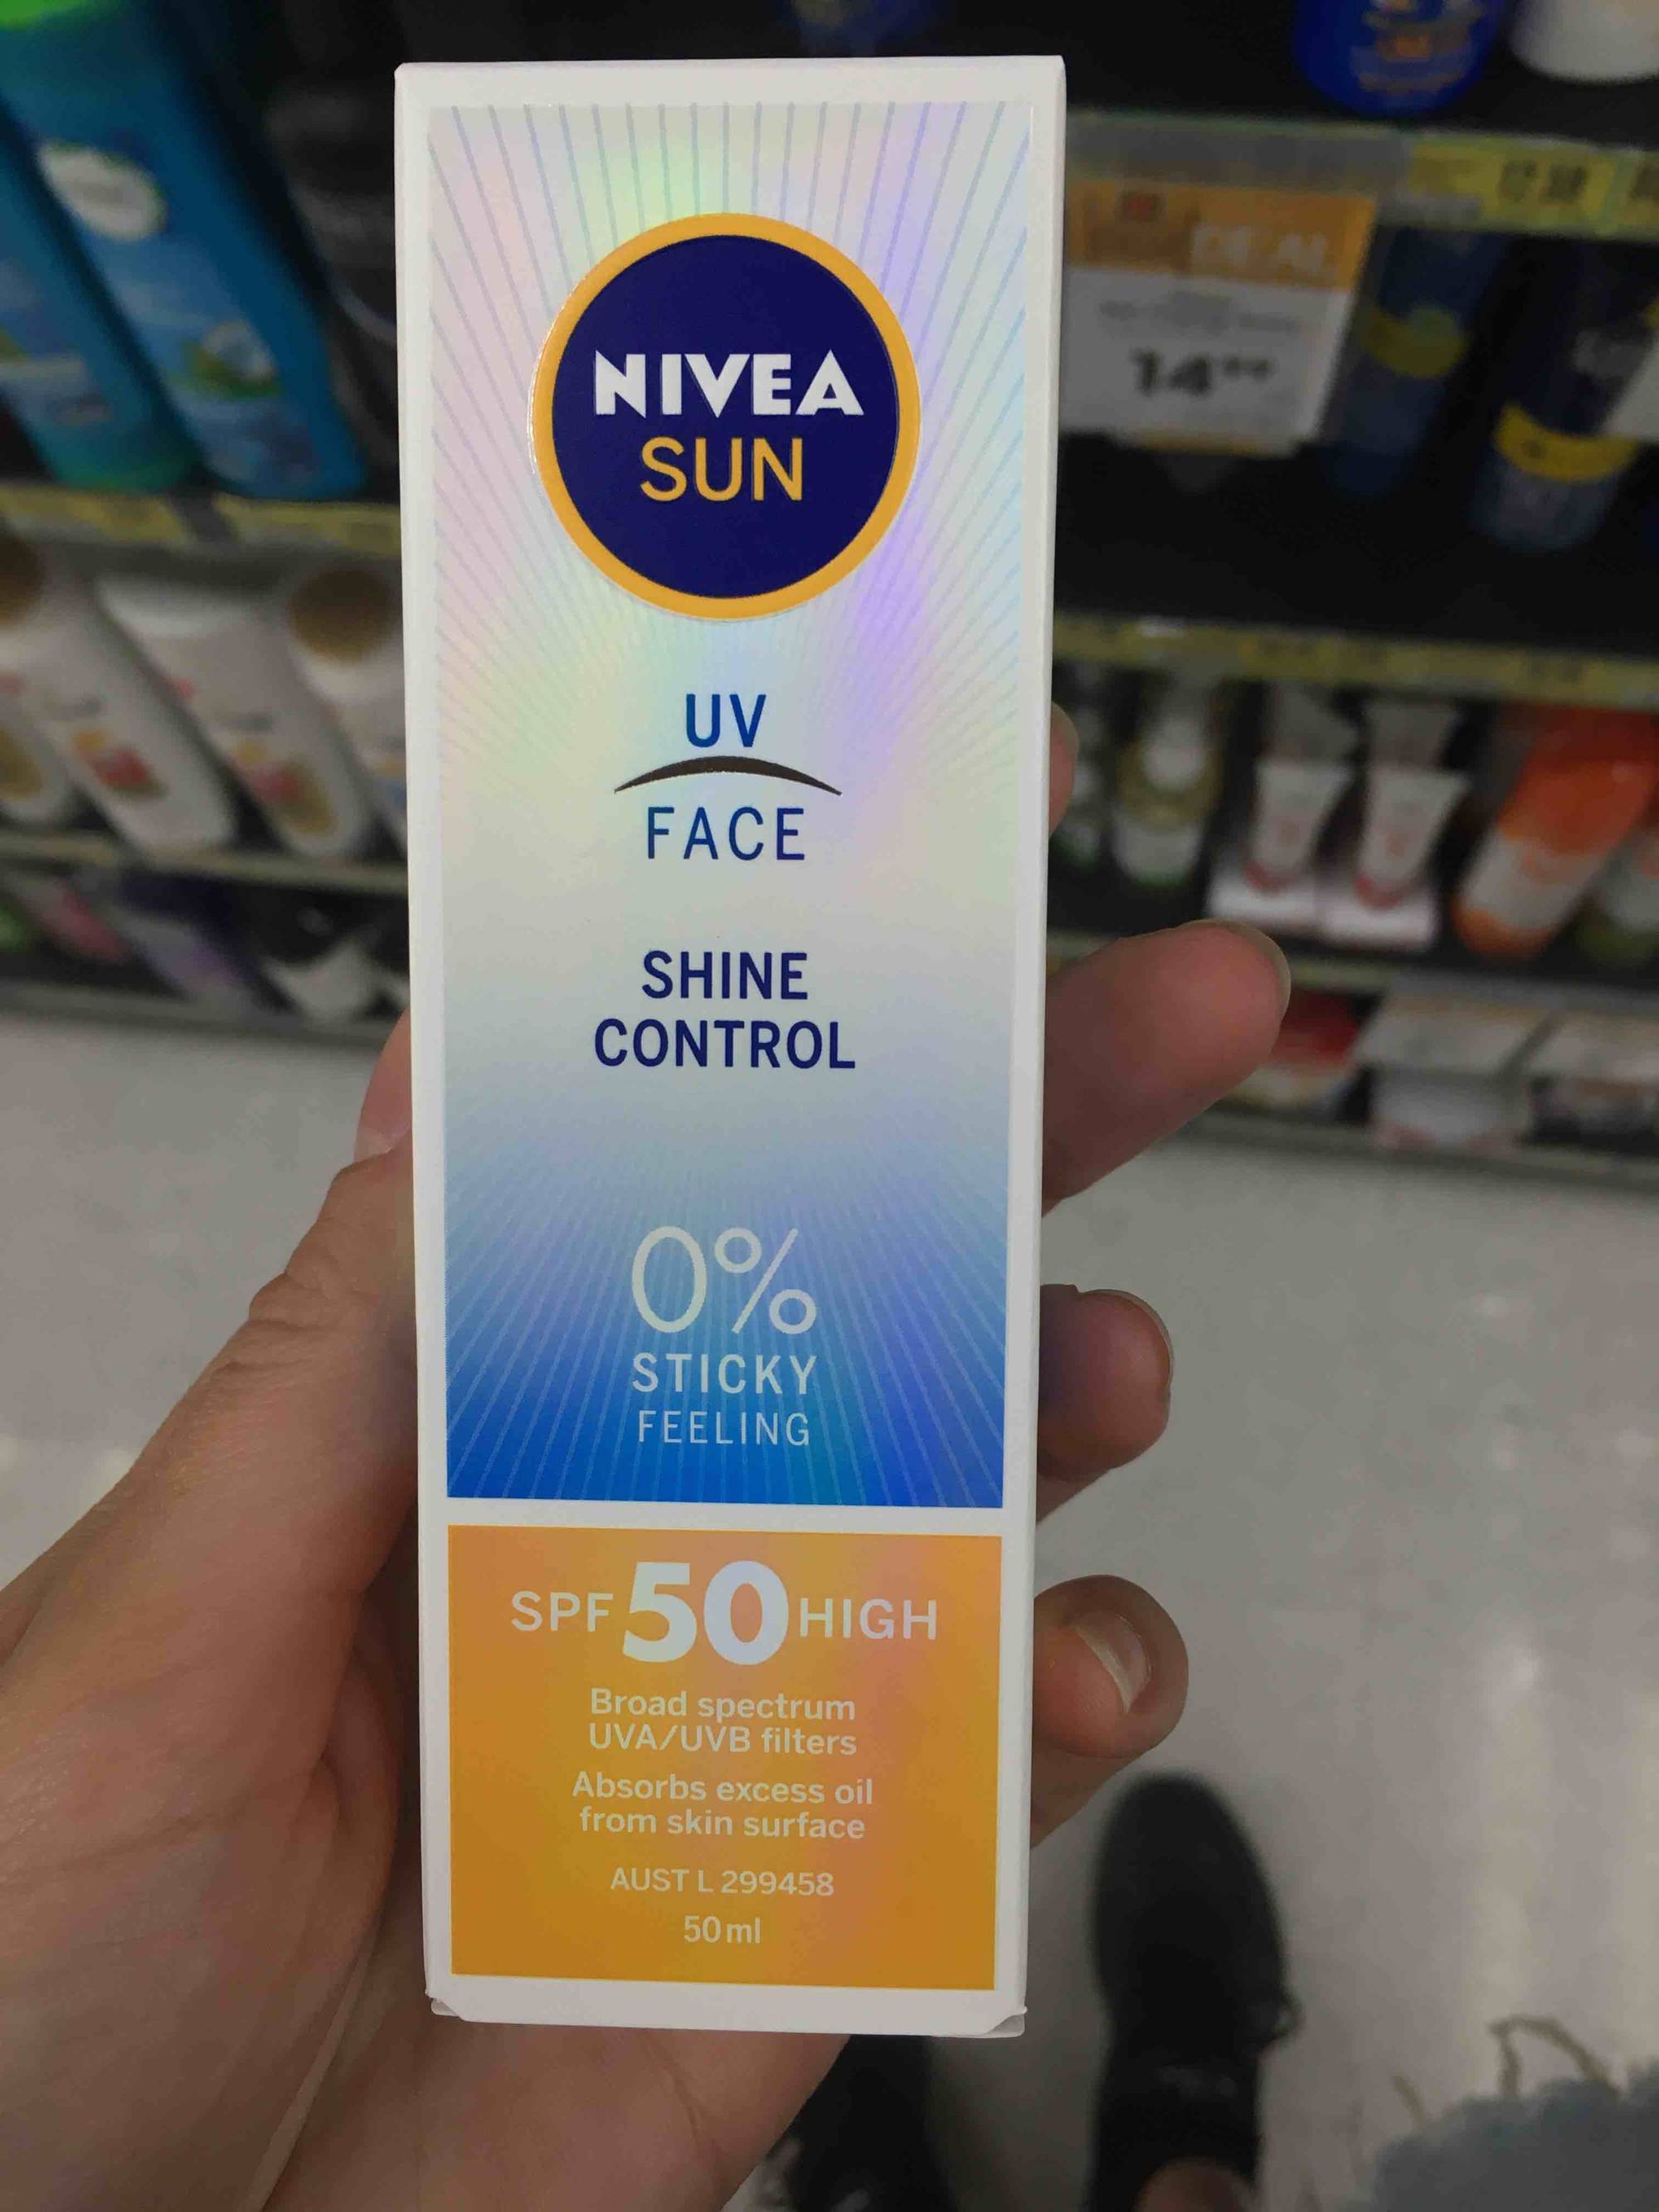 NIVEA - Sun UV face - Shine control SPF 50